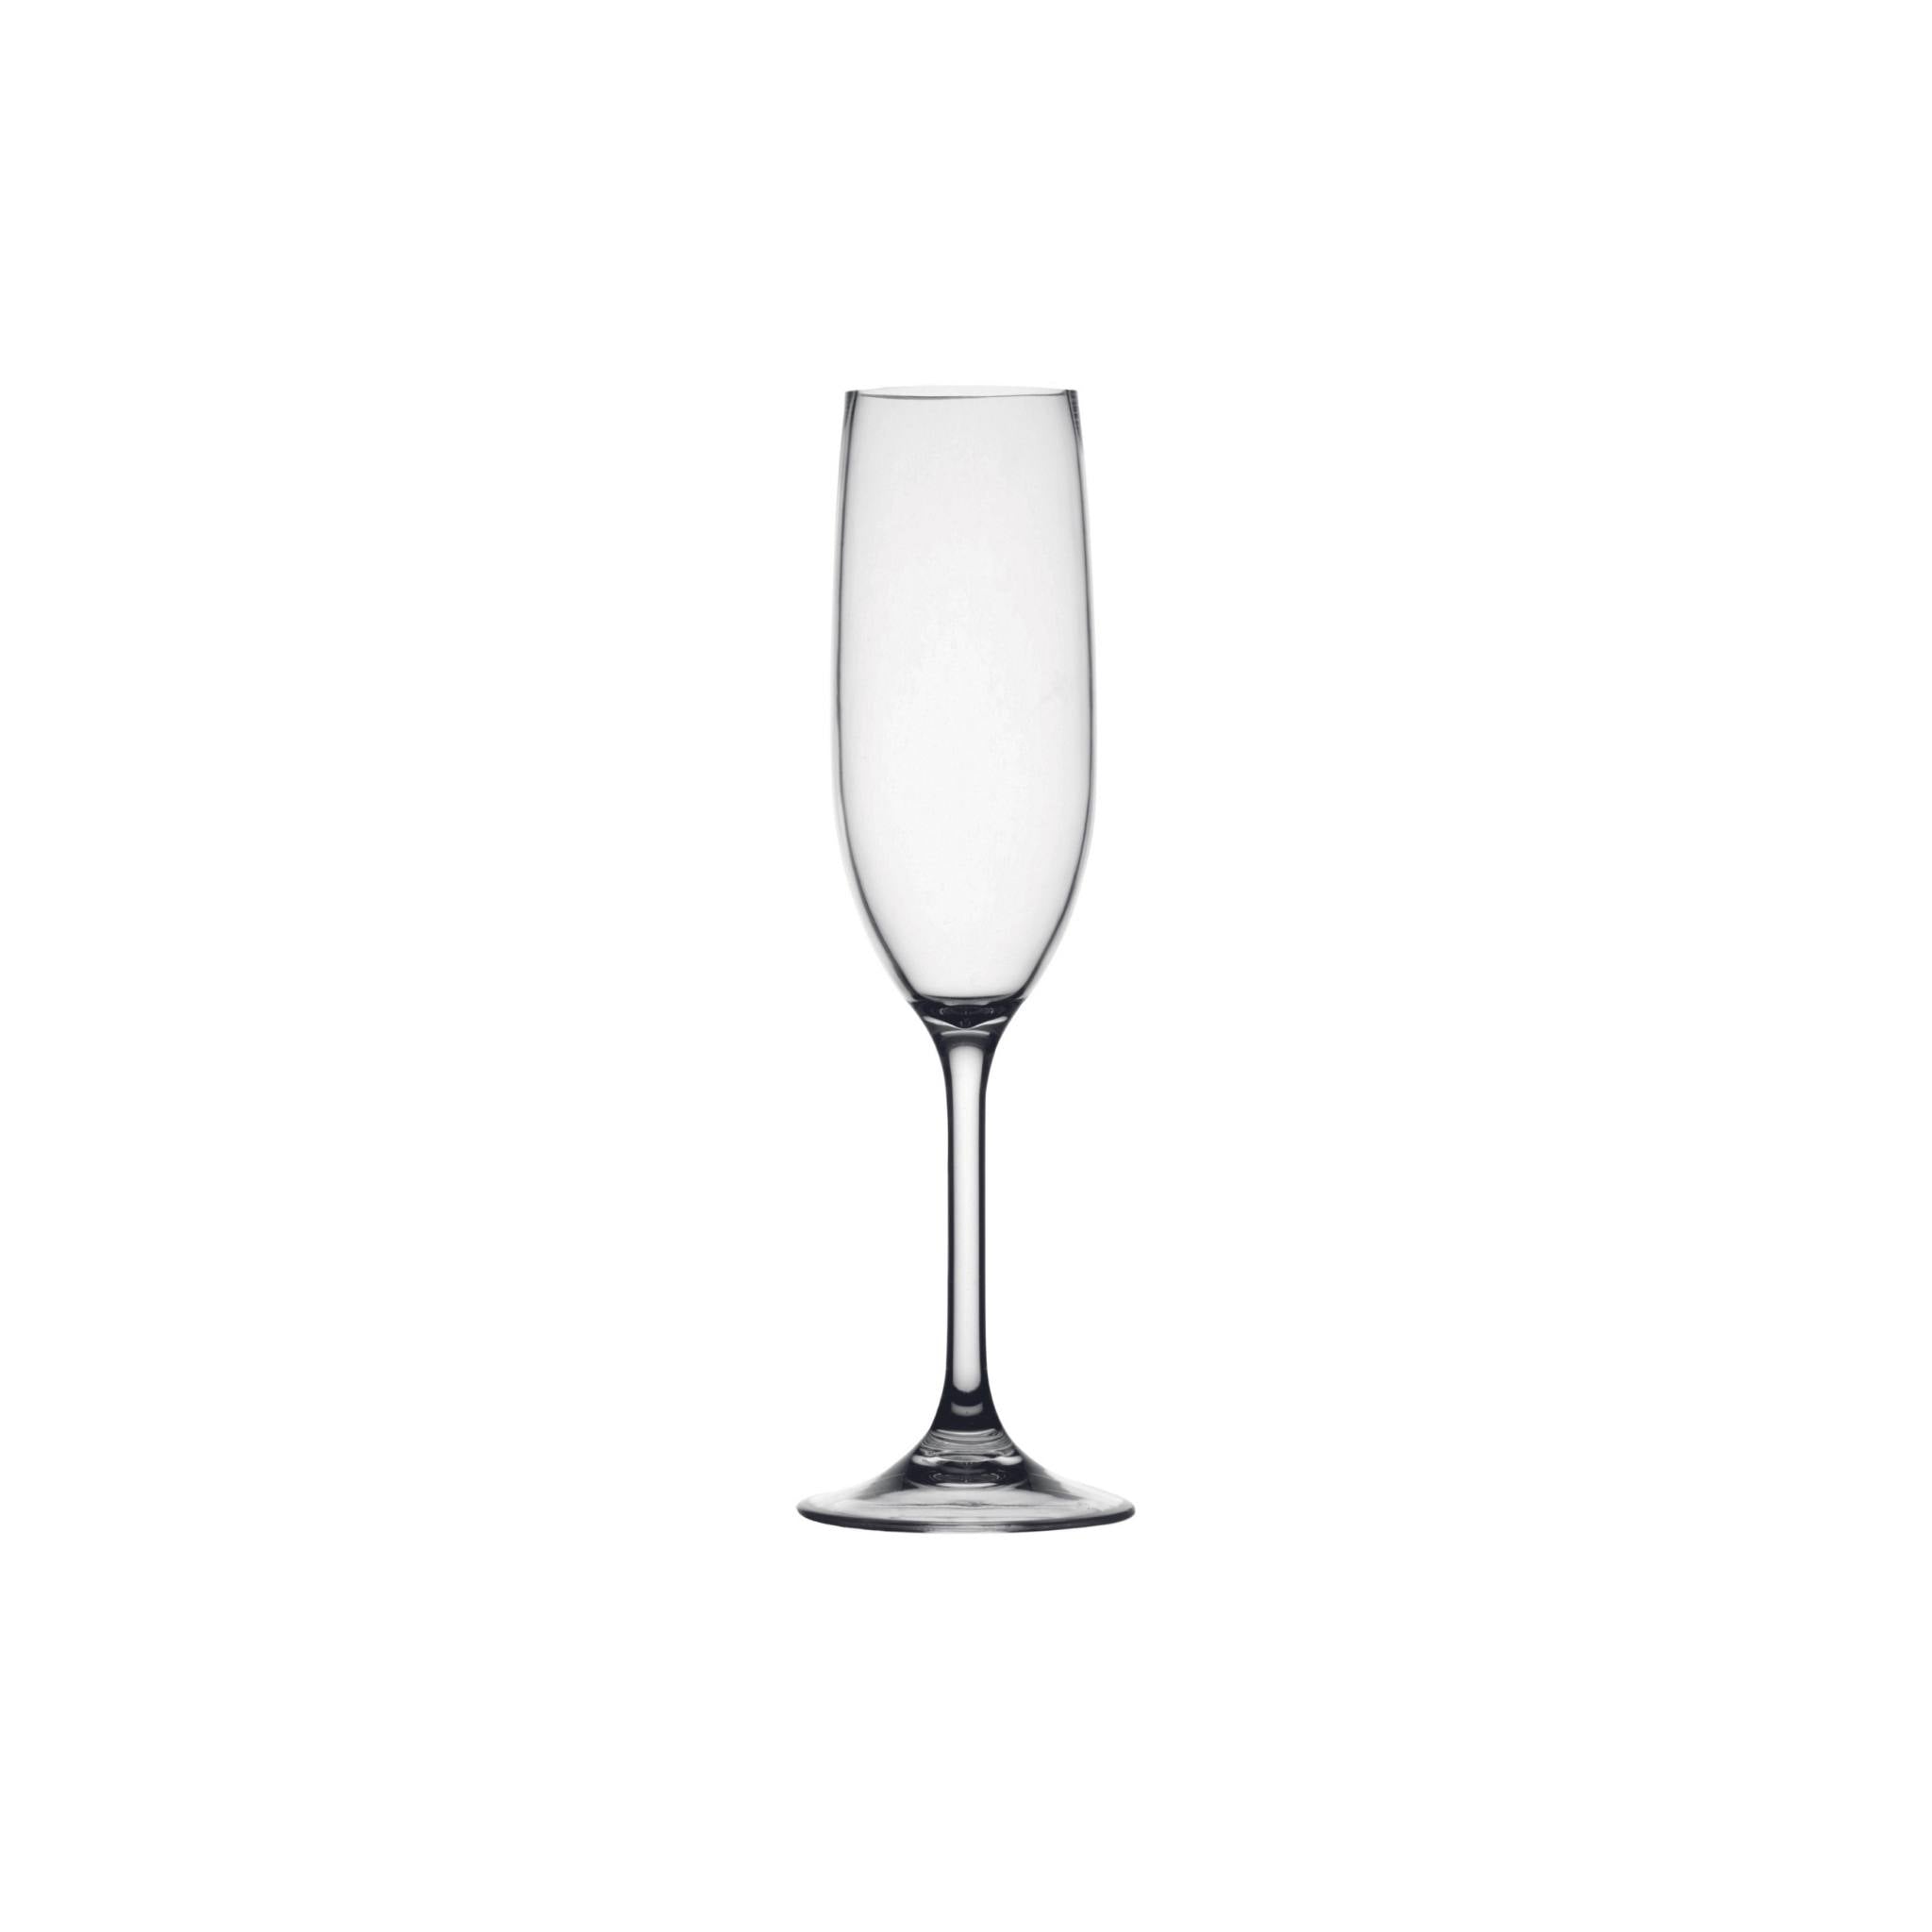 Delect Champagne Glasses - Set of 6